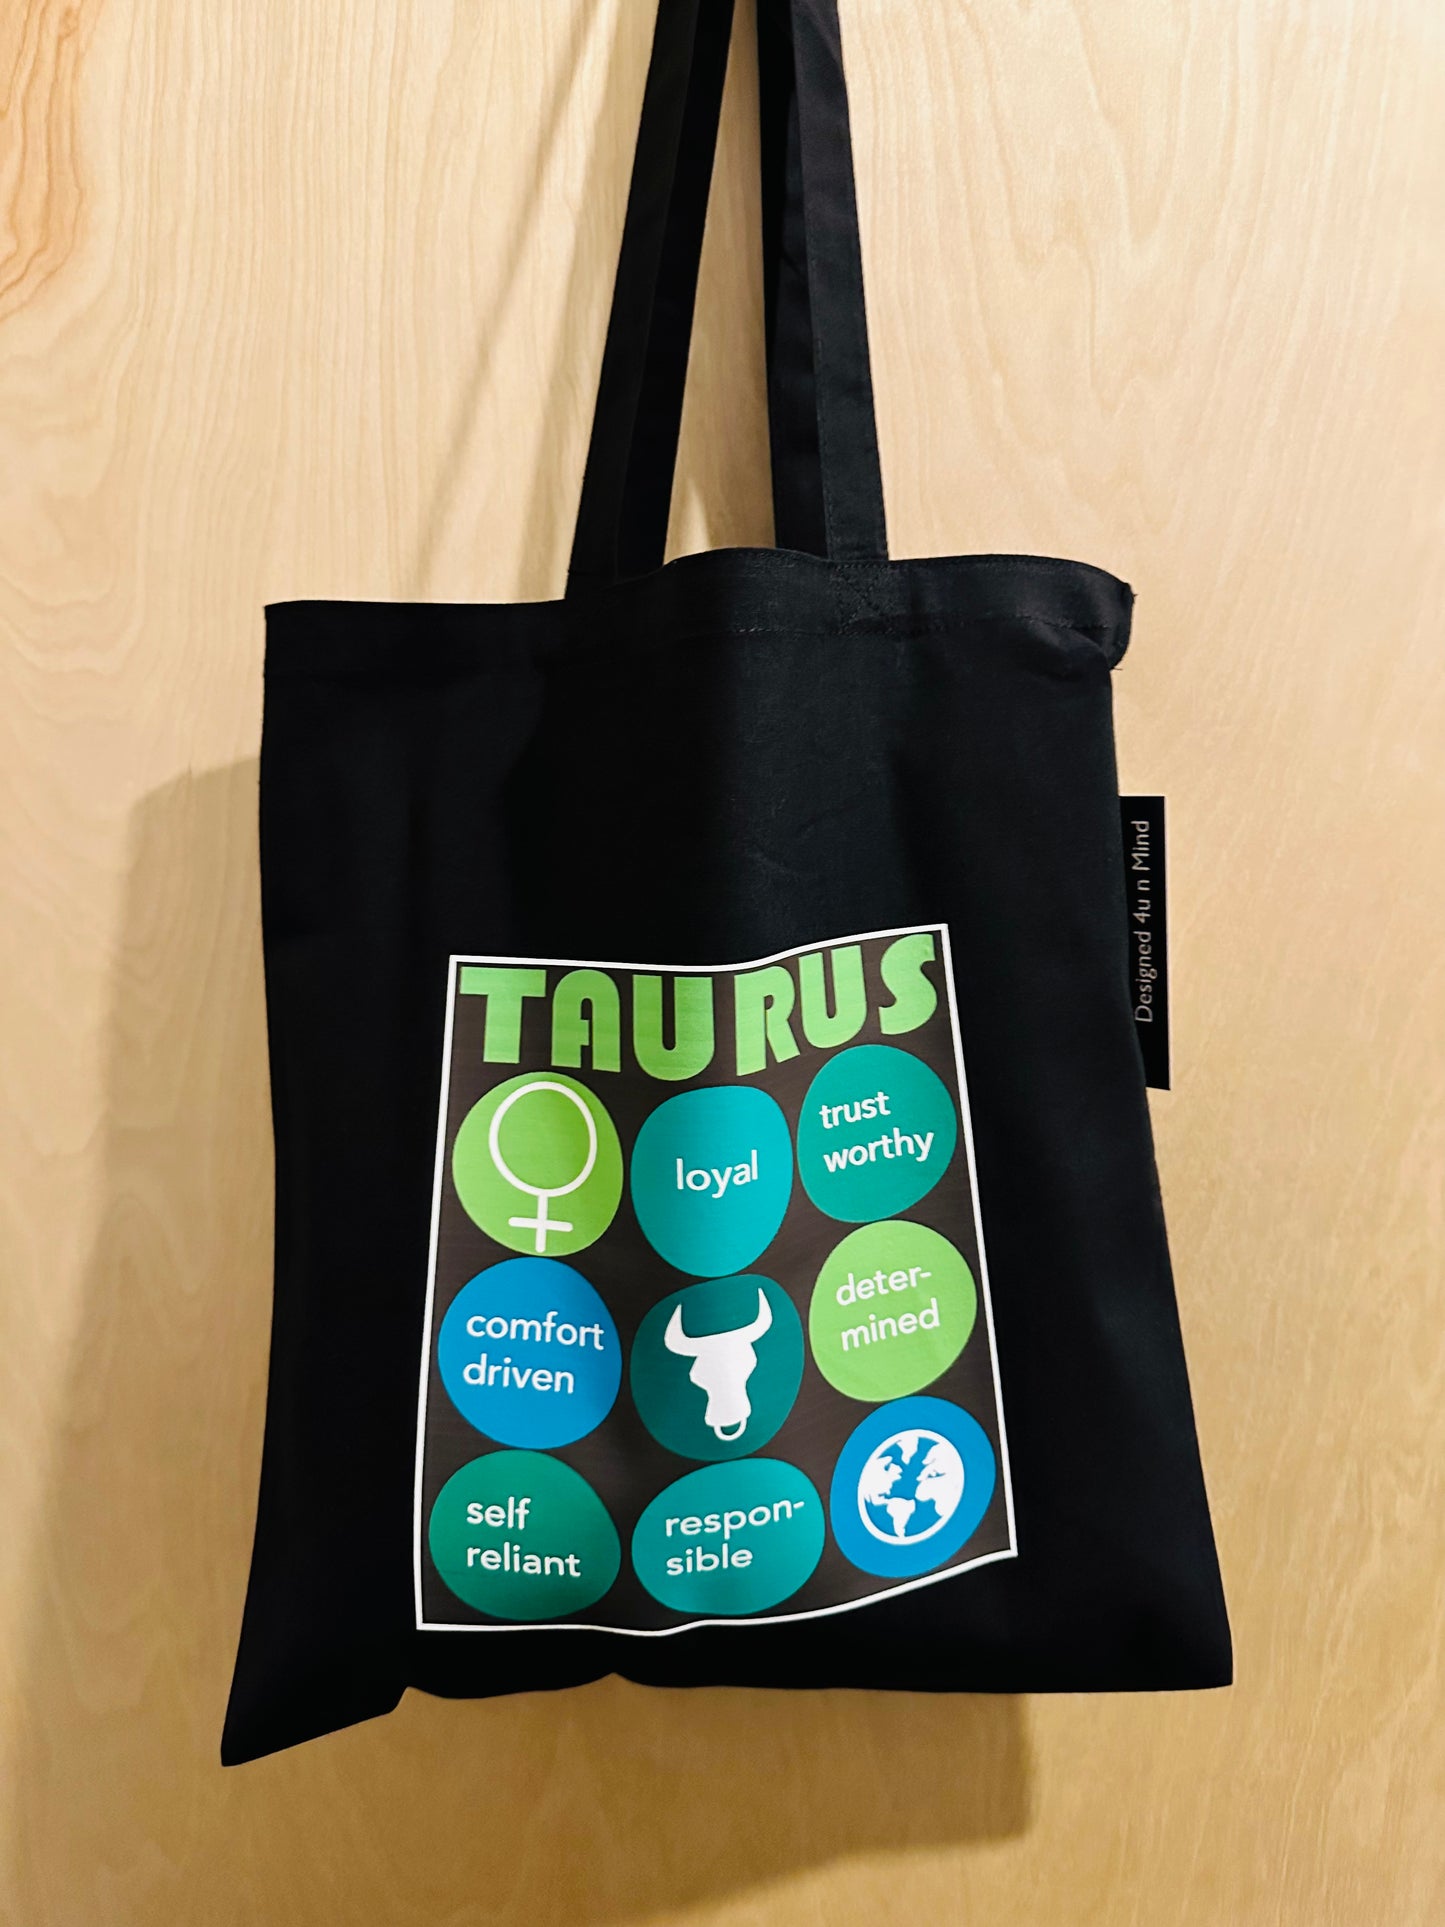 Black TAURUS Zodiac Unisex Cotton Reusable Tote Bag